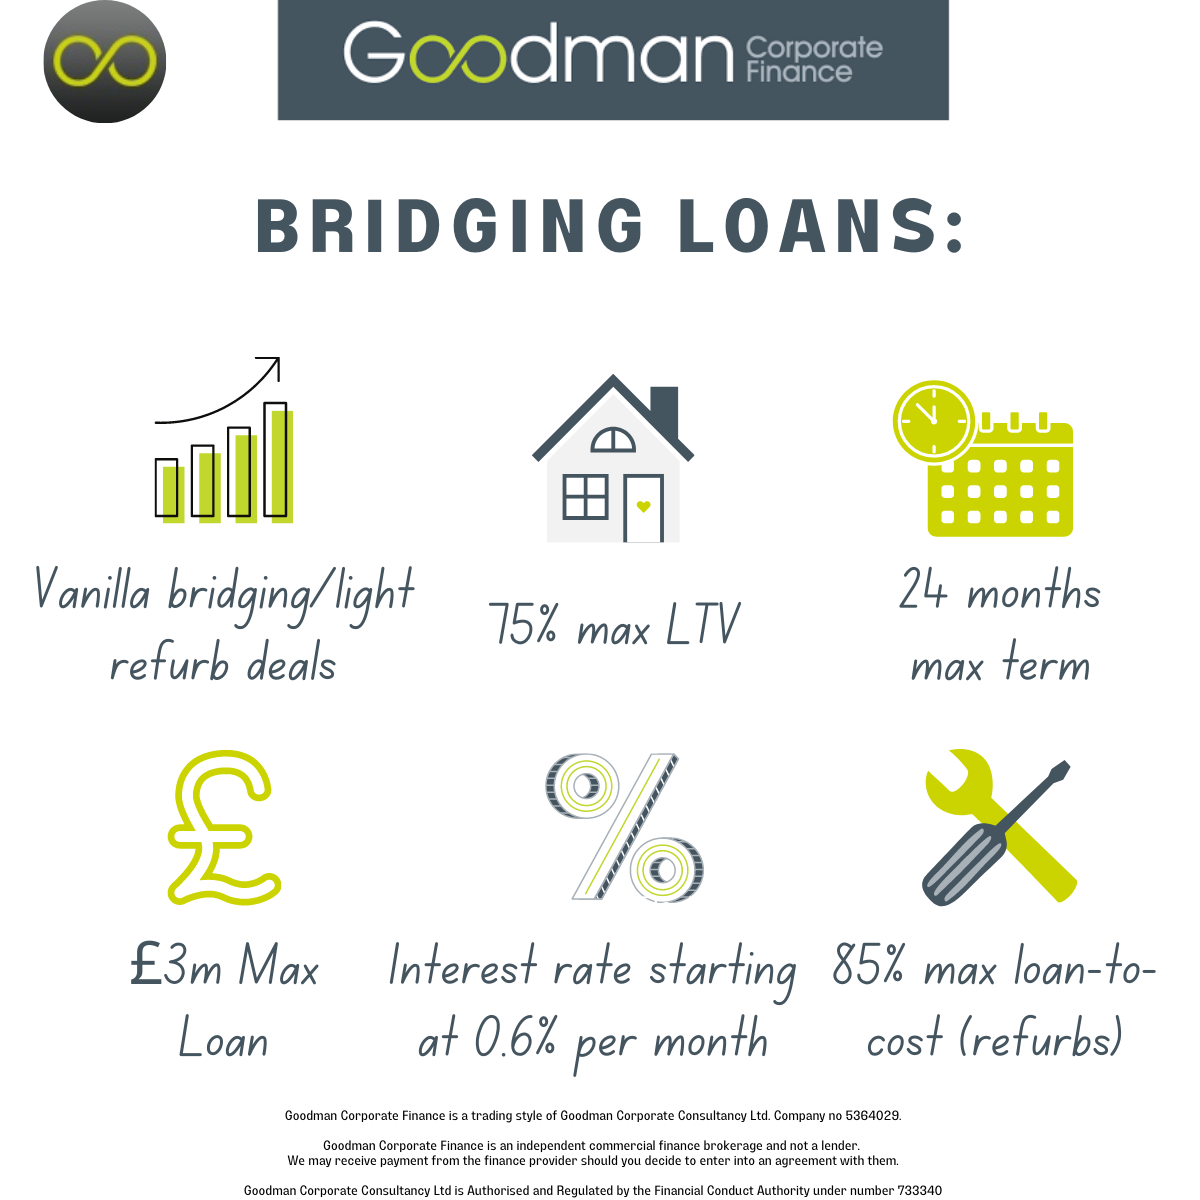 multi-product bridging loans